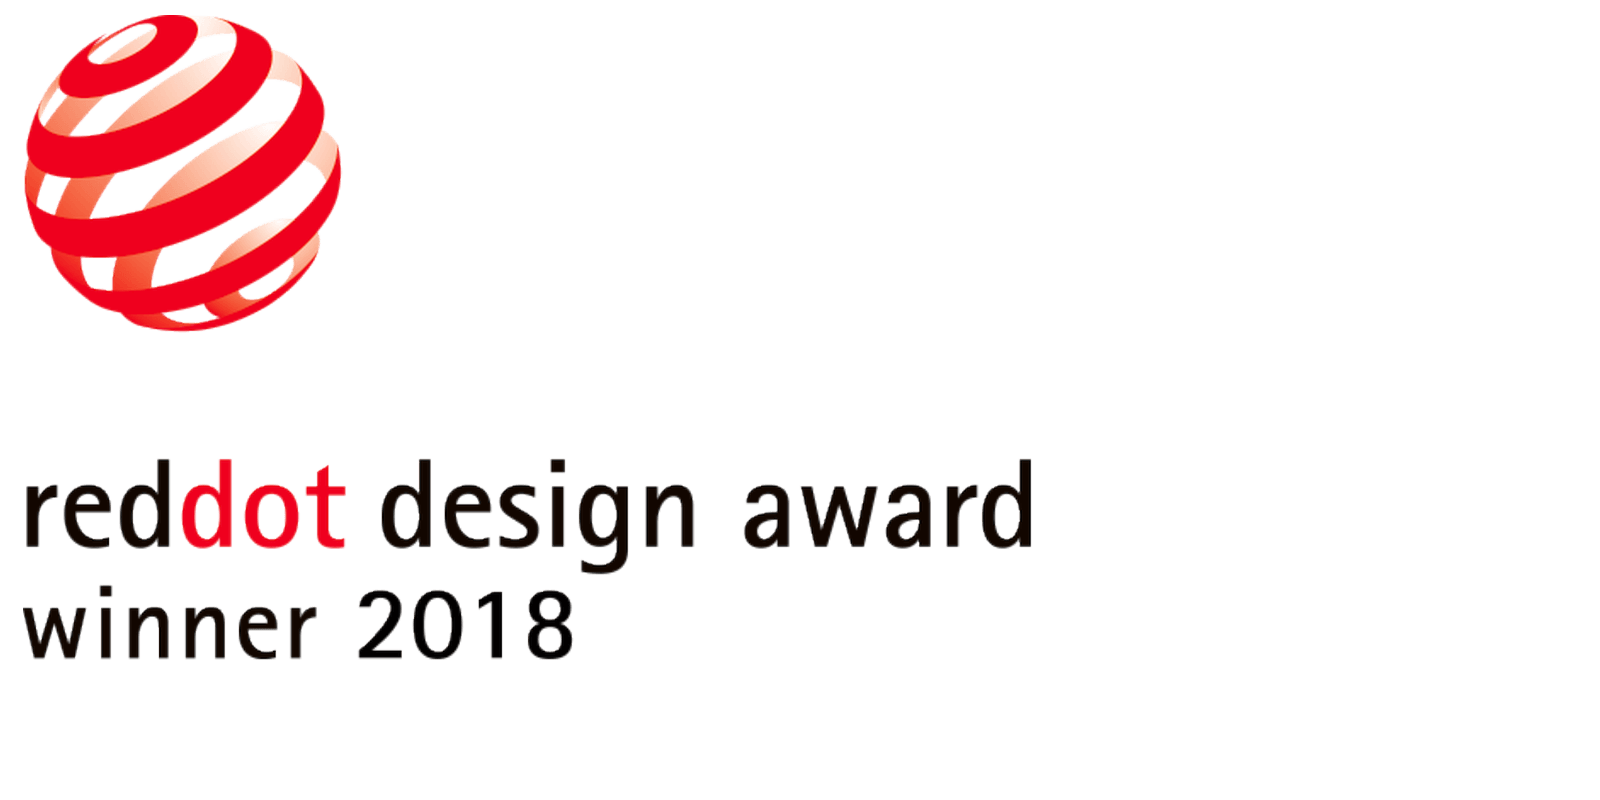 [Translate to German (Switzerland):] Reddot design award logo